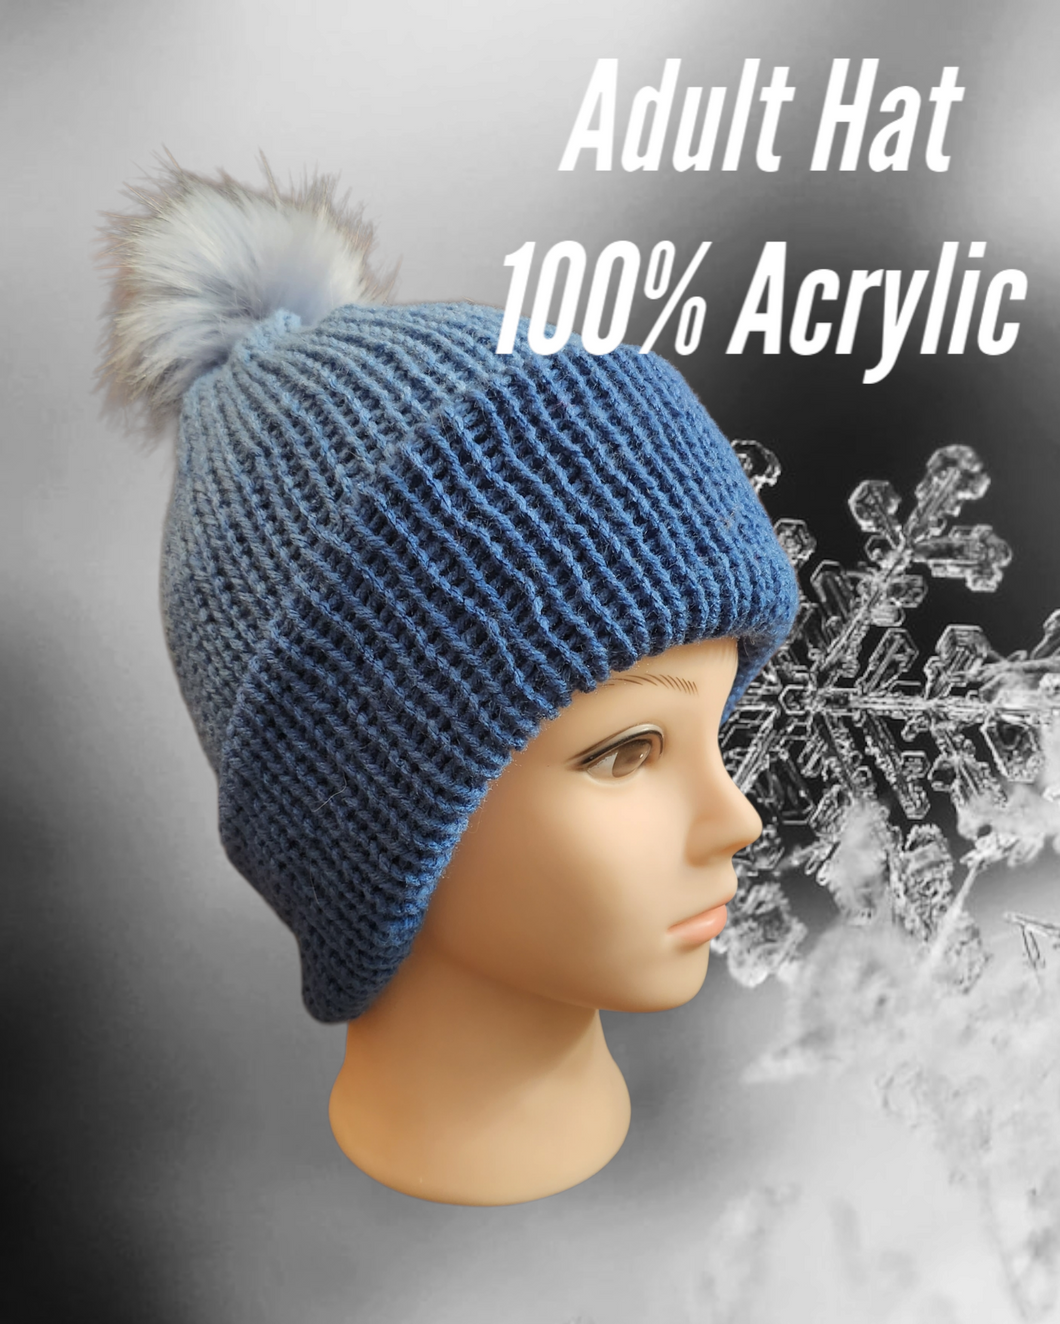 Toboggan / Beanie Type Hats 100% Acrylic